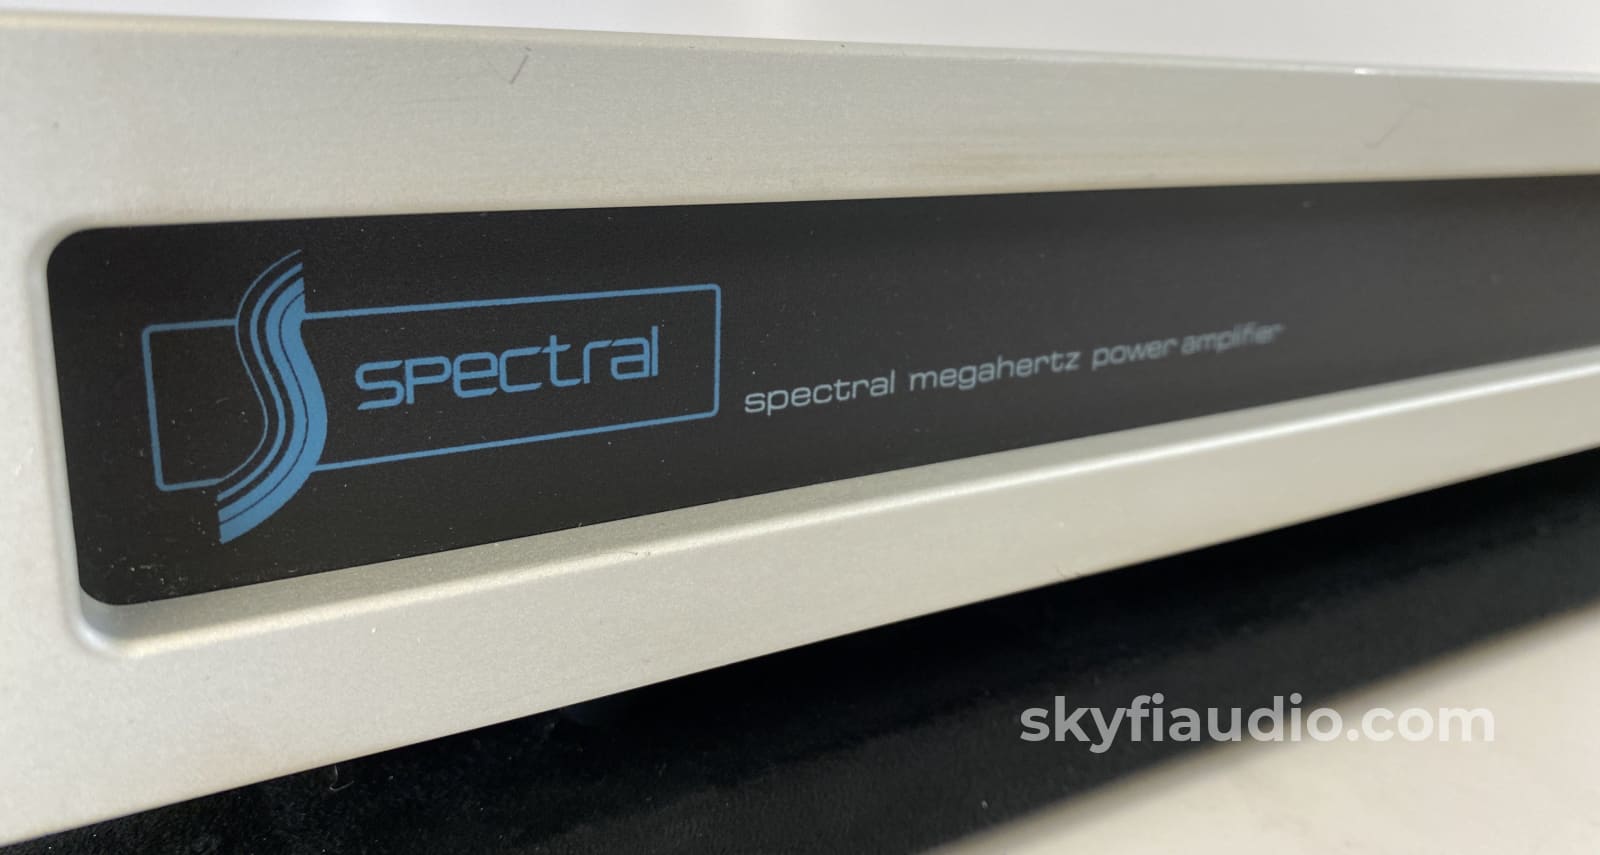 Spectral Audio Dma-50 Megahertz Power Amplifier